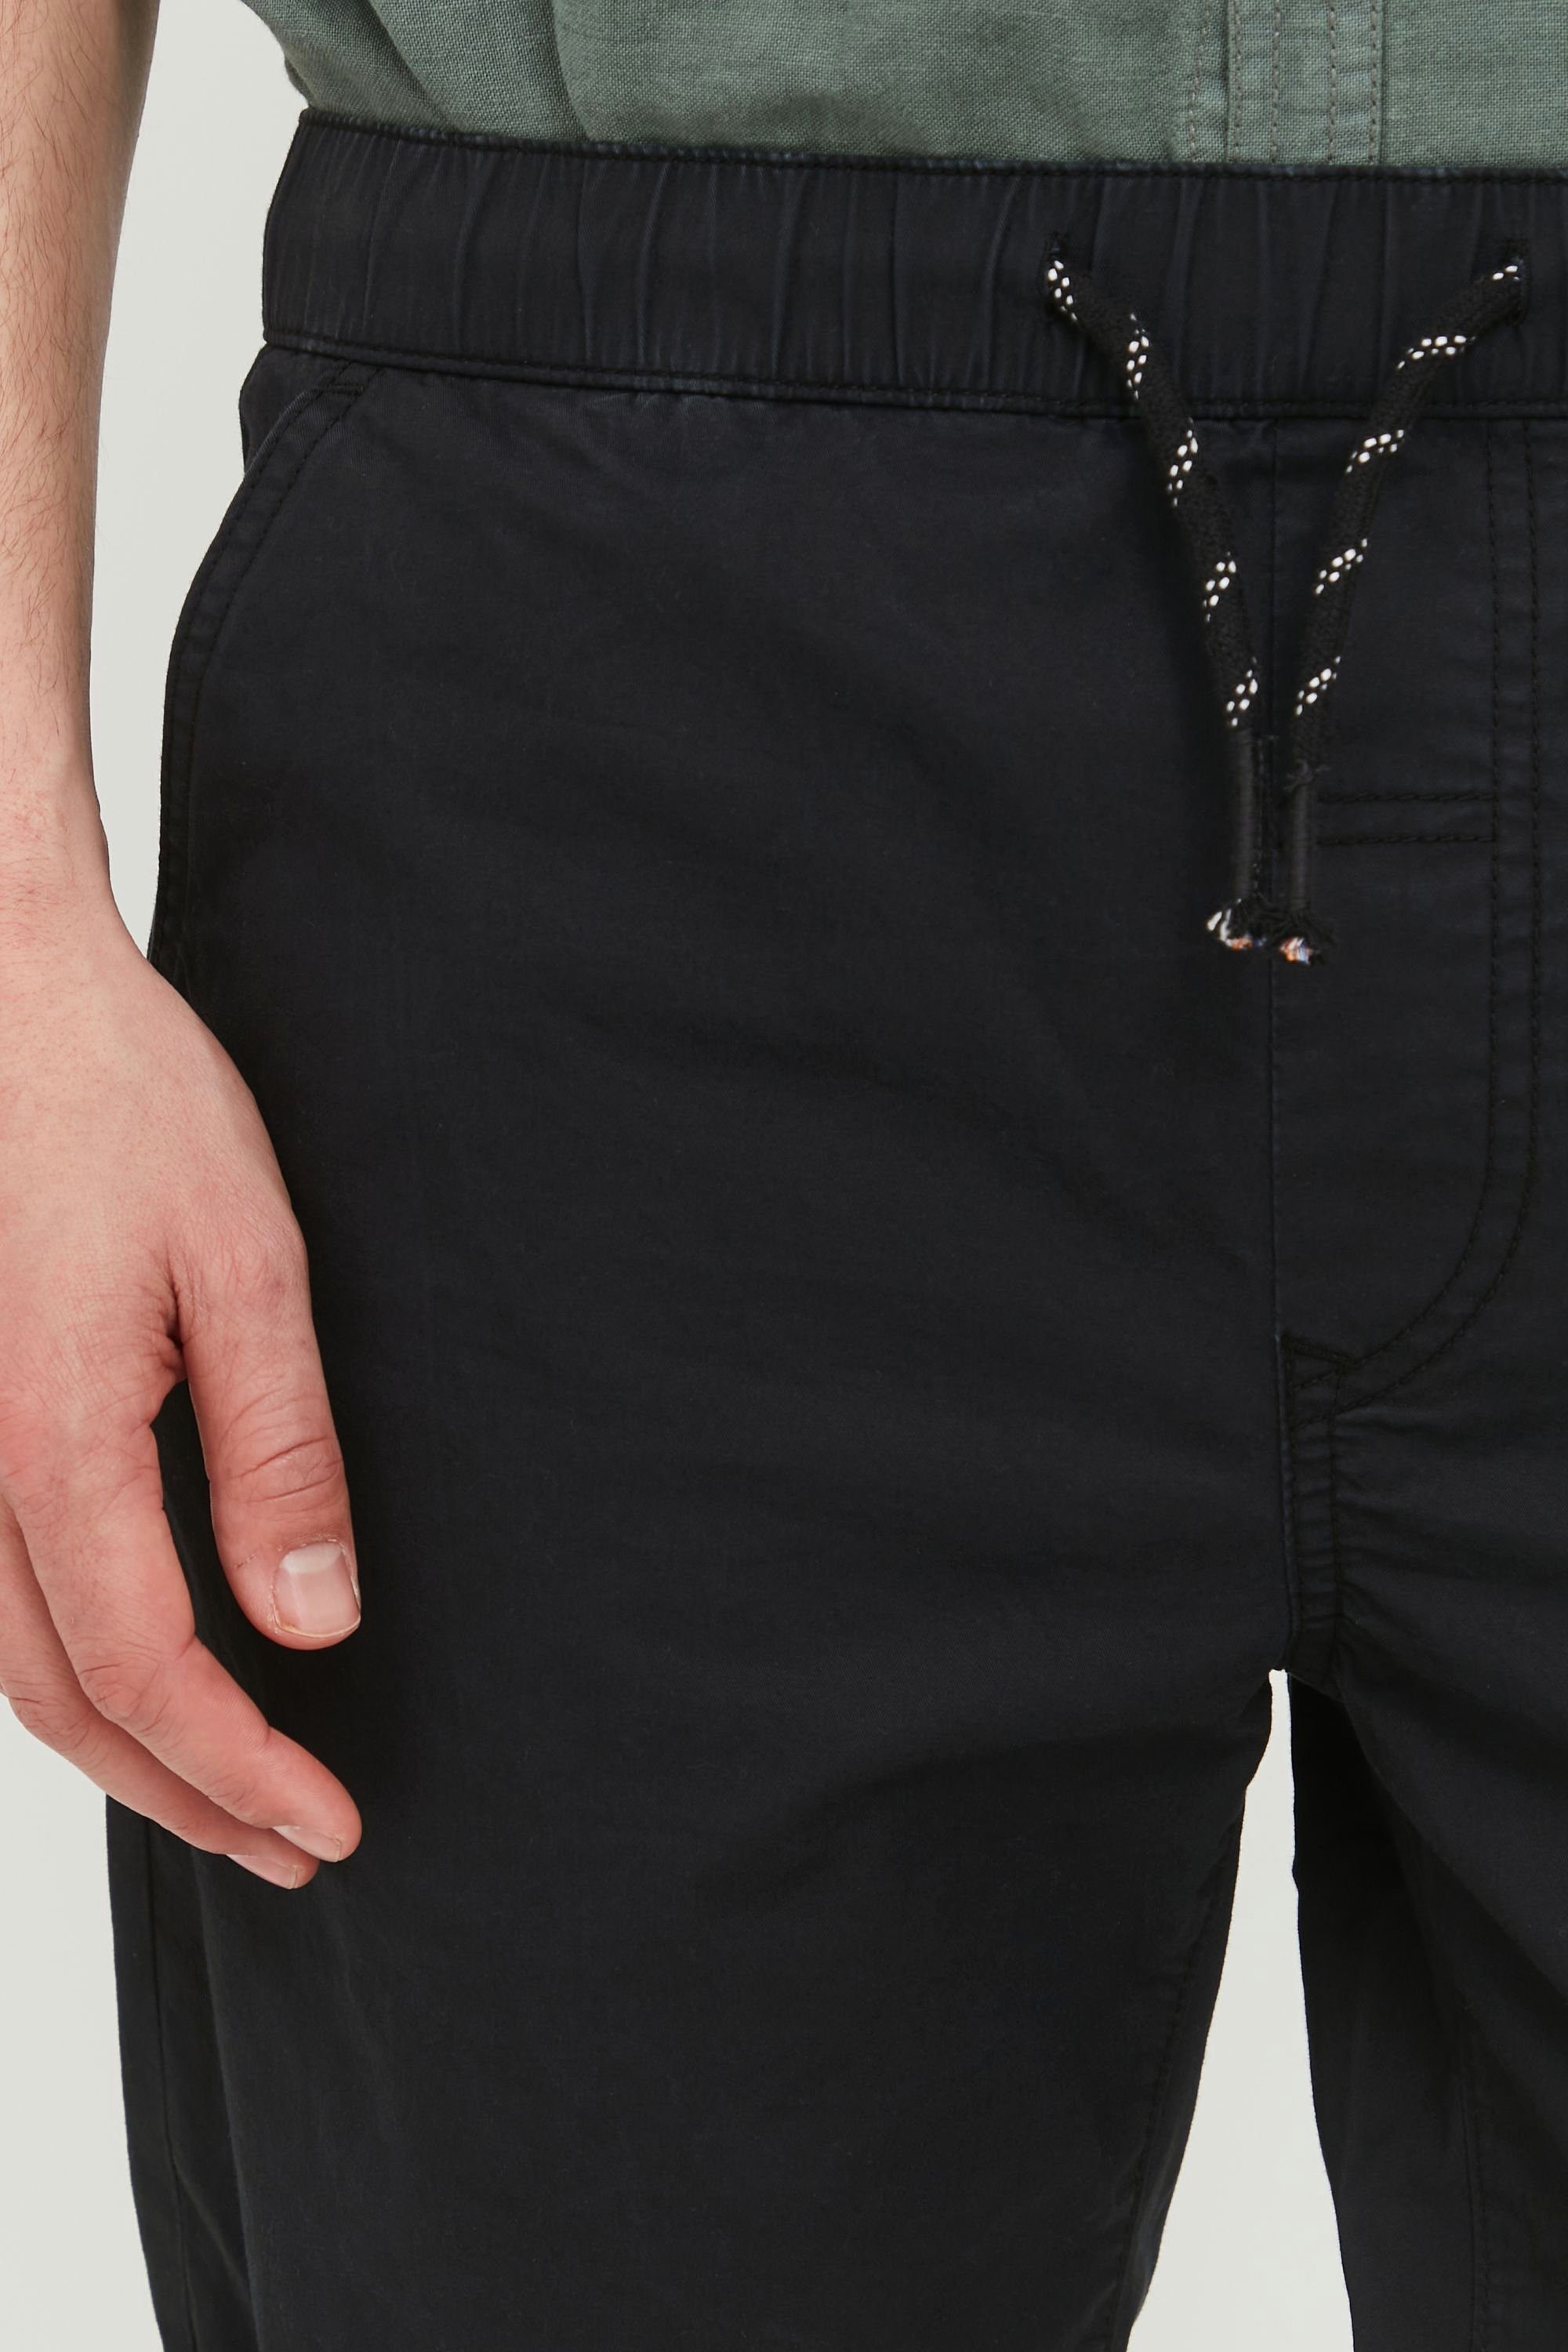 Solid Chinoshorts SDLinan Chino elastischem Black Shorts mit Bund (194007)